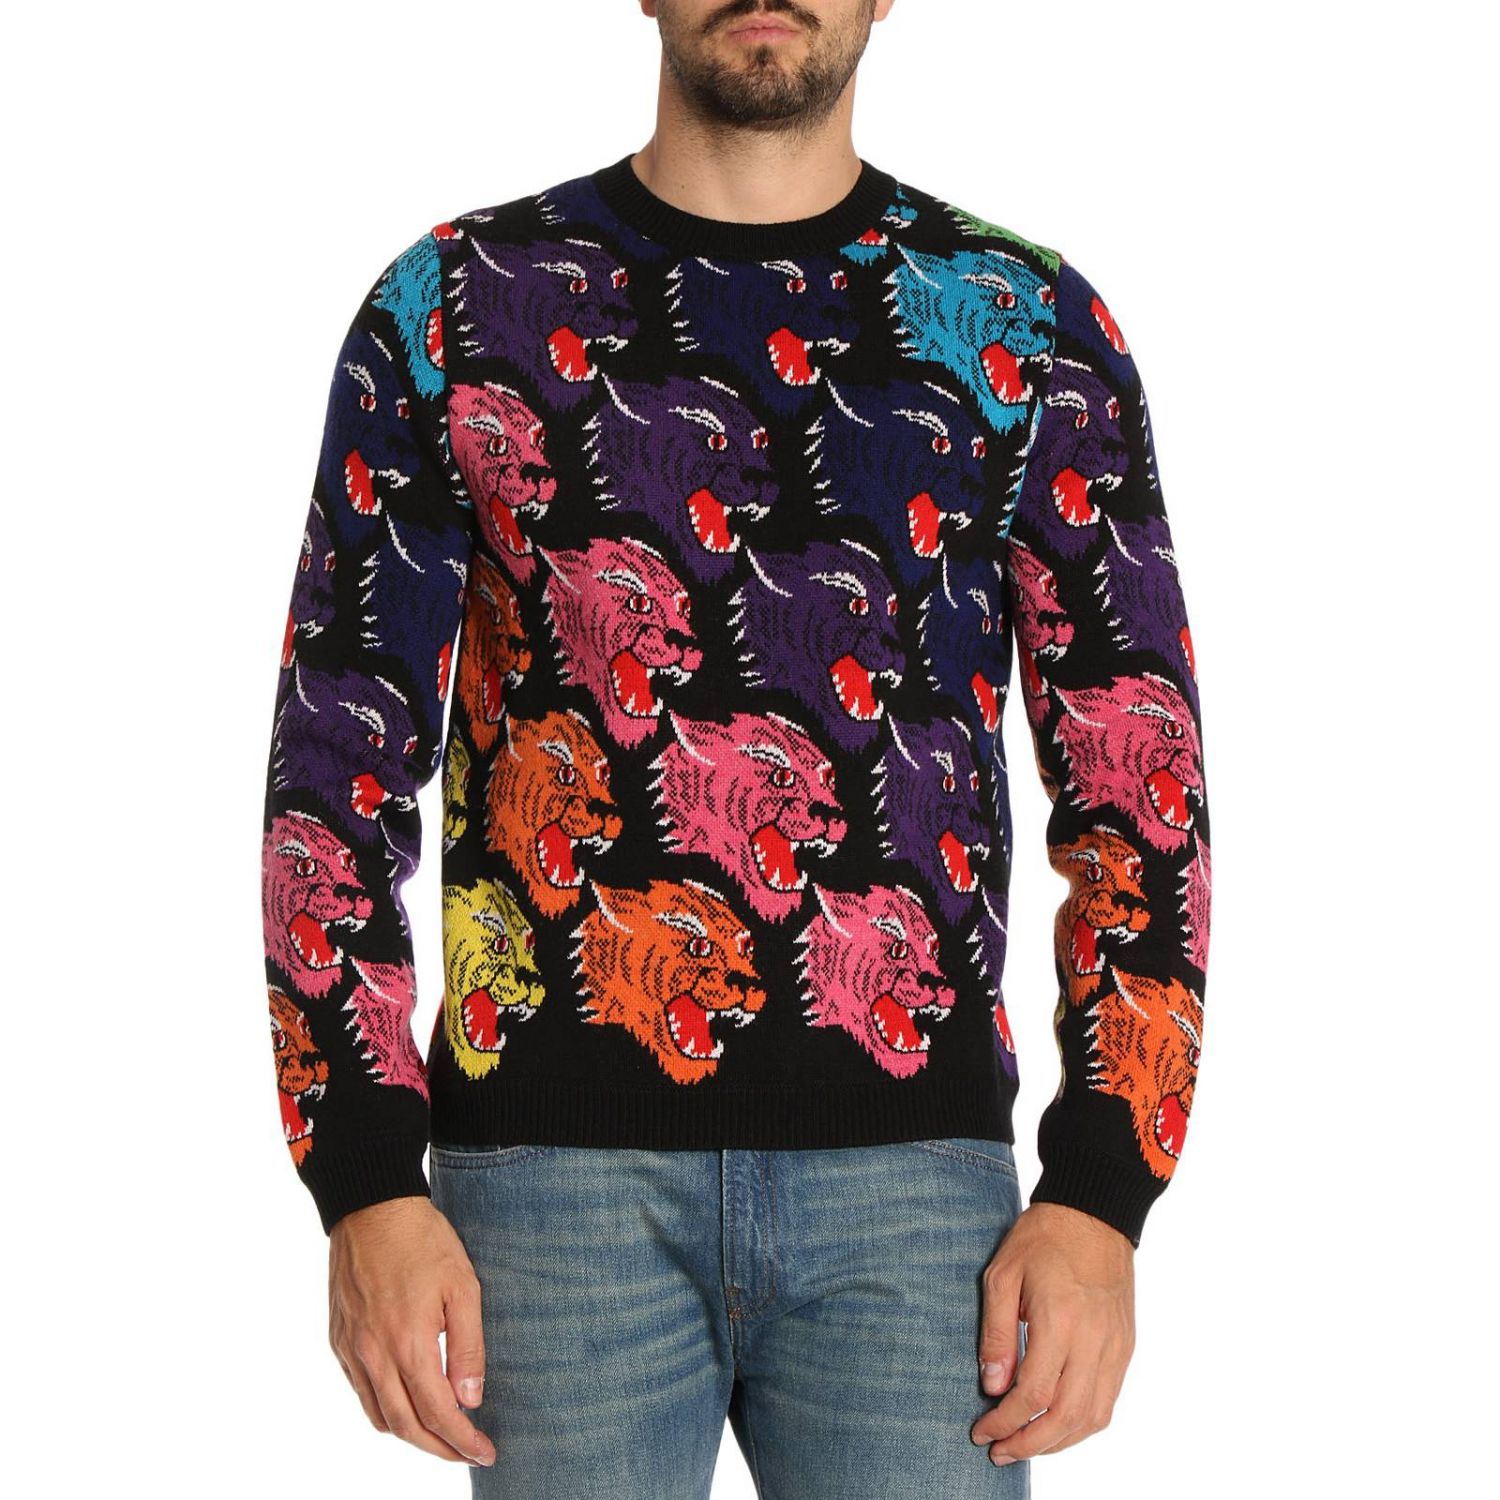 Мультиколор мужские куртки. Gucci Sweater. Multicolor Gucci Sweater. Gucci Mens Sweater. Свитер гуччи мужской.